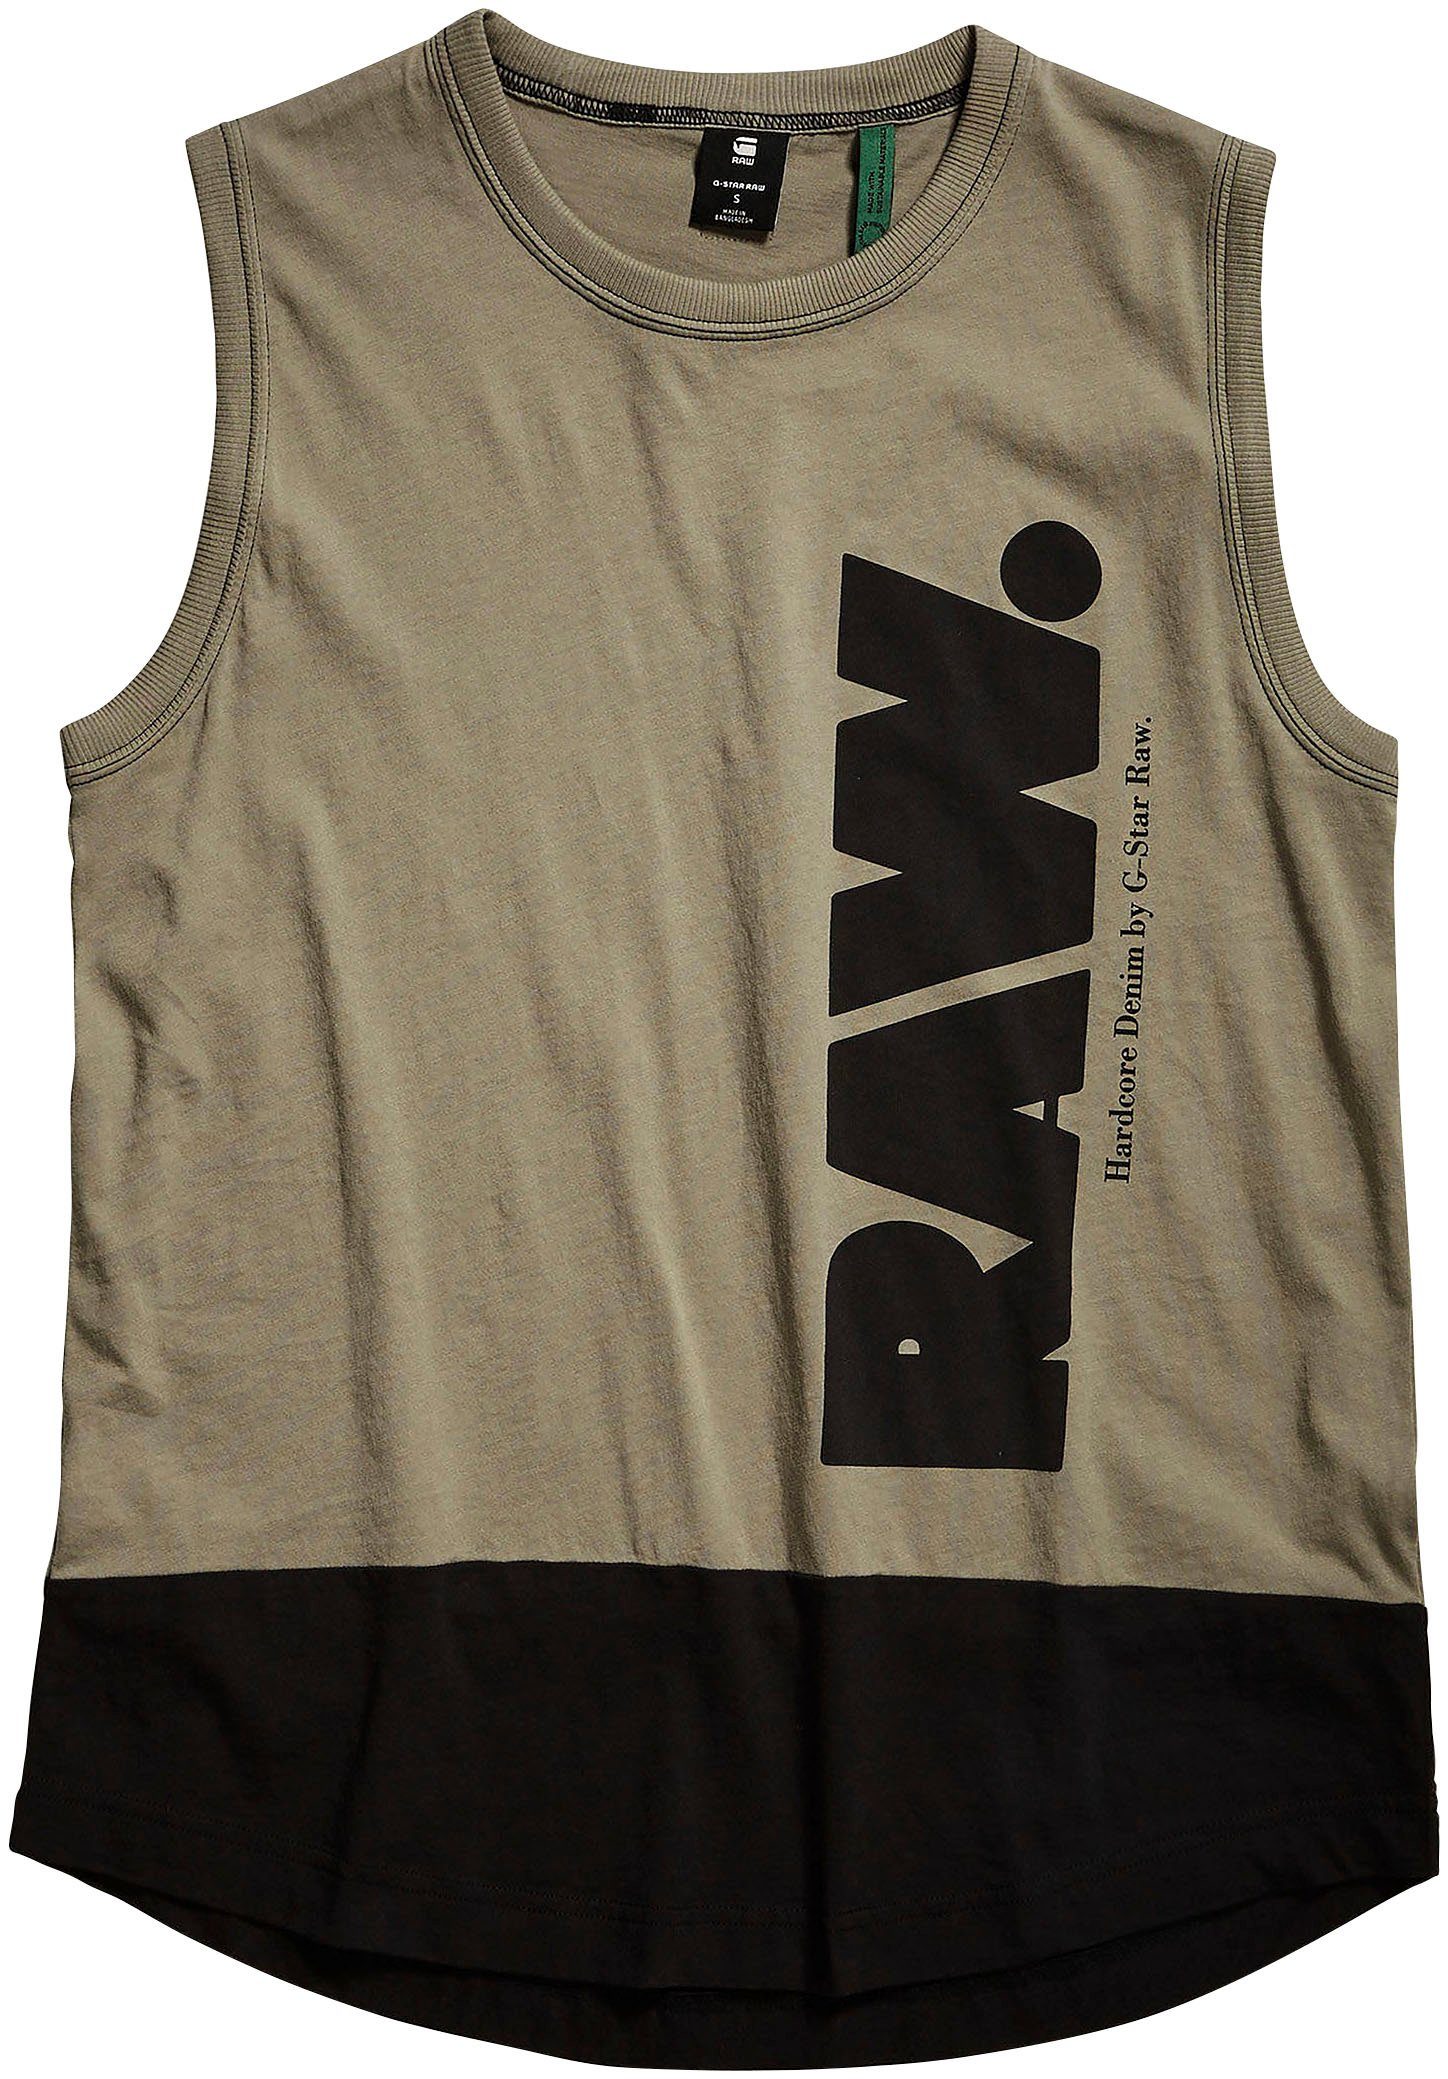 G-Star RAW T-Shirt to (oliv/schwarz) mti block black vorne Logo color Grafikdruck Lash shamrock/dk T-Shirt tank